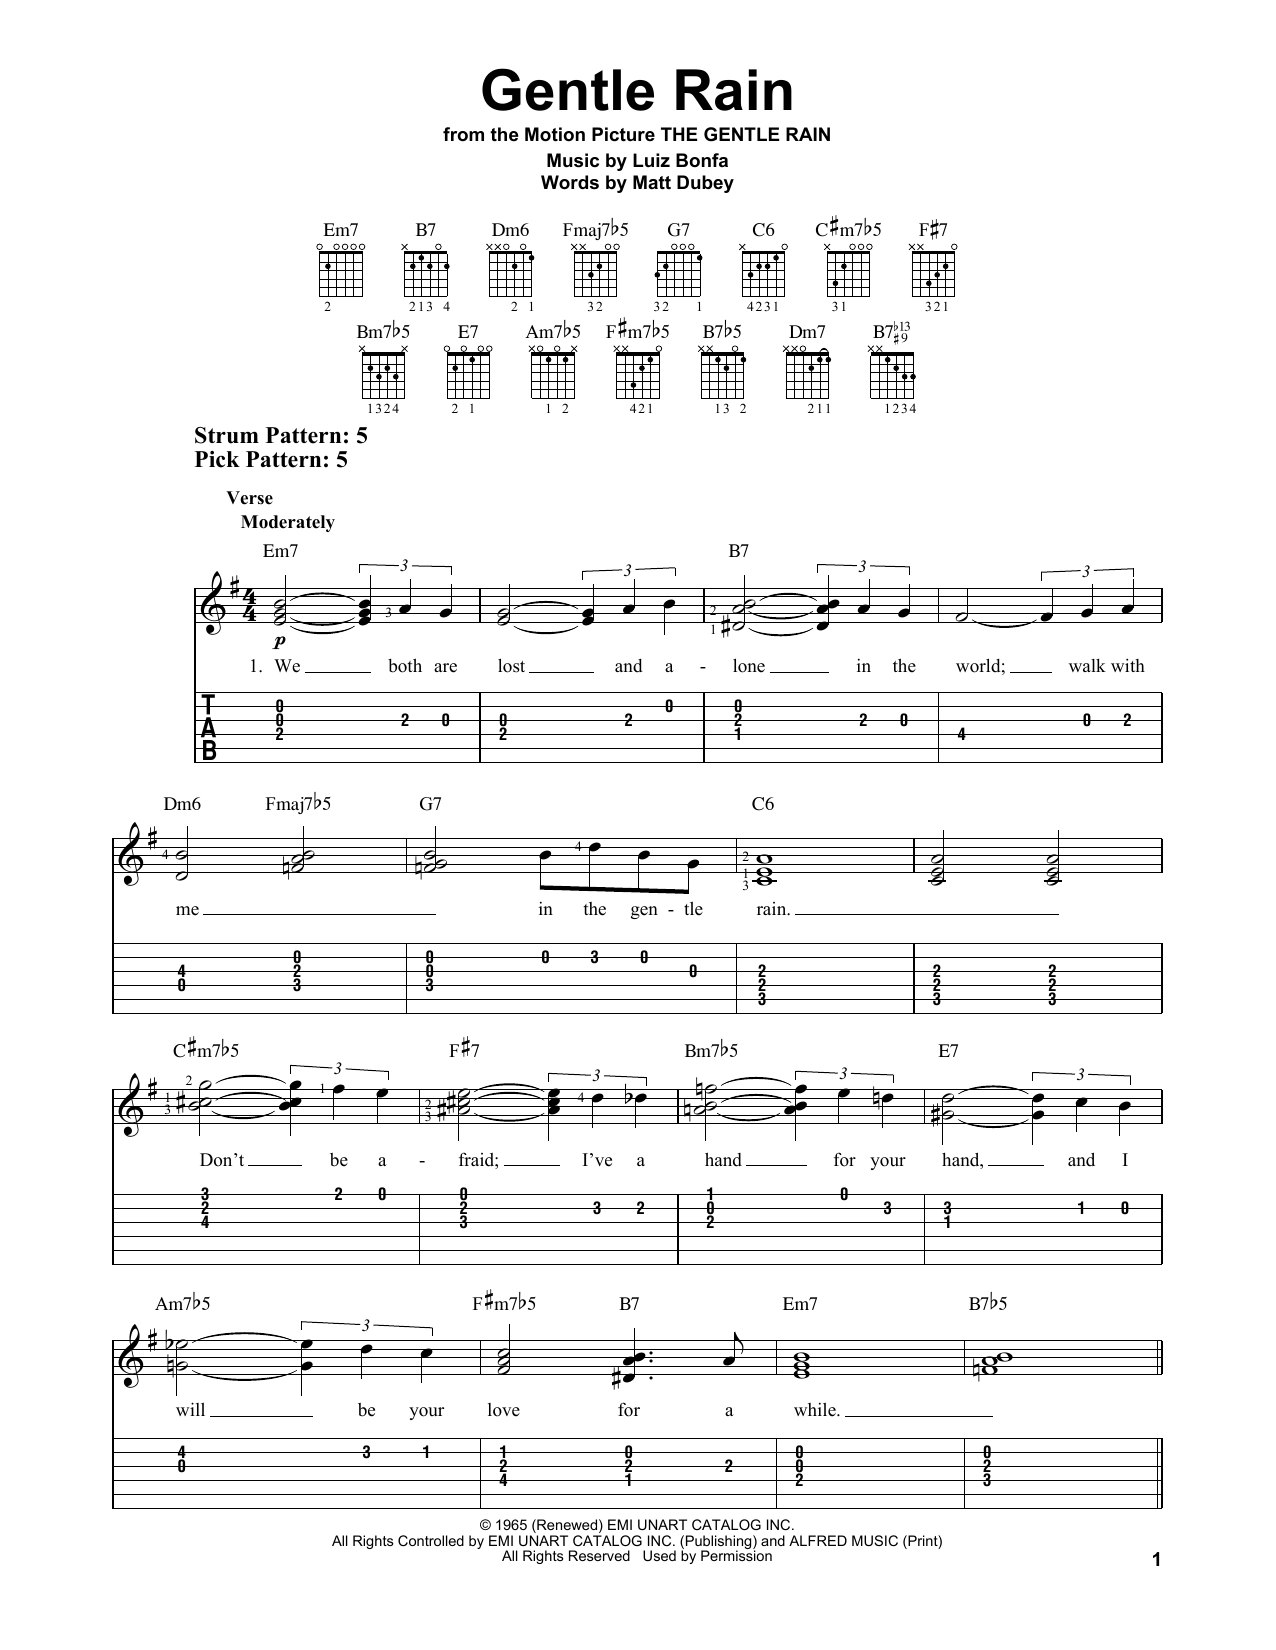 Download Luiz Bonfa Gentle Rain Sheet Music and learn how to play Easy Guitar Tab PDF digital score in minutes